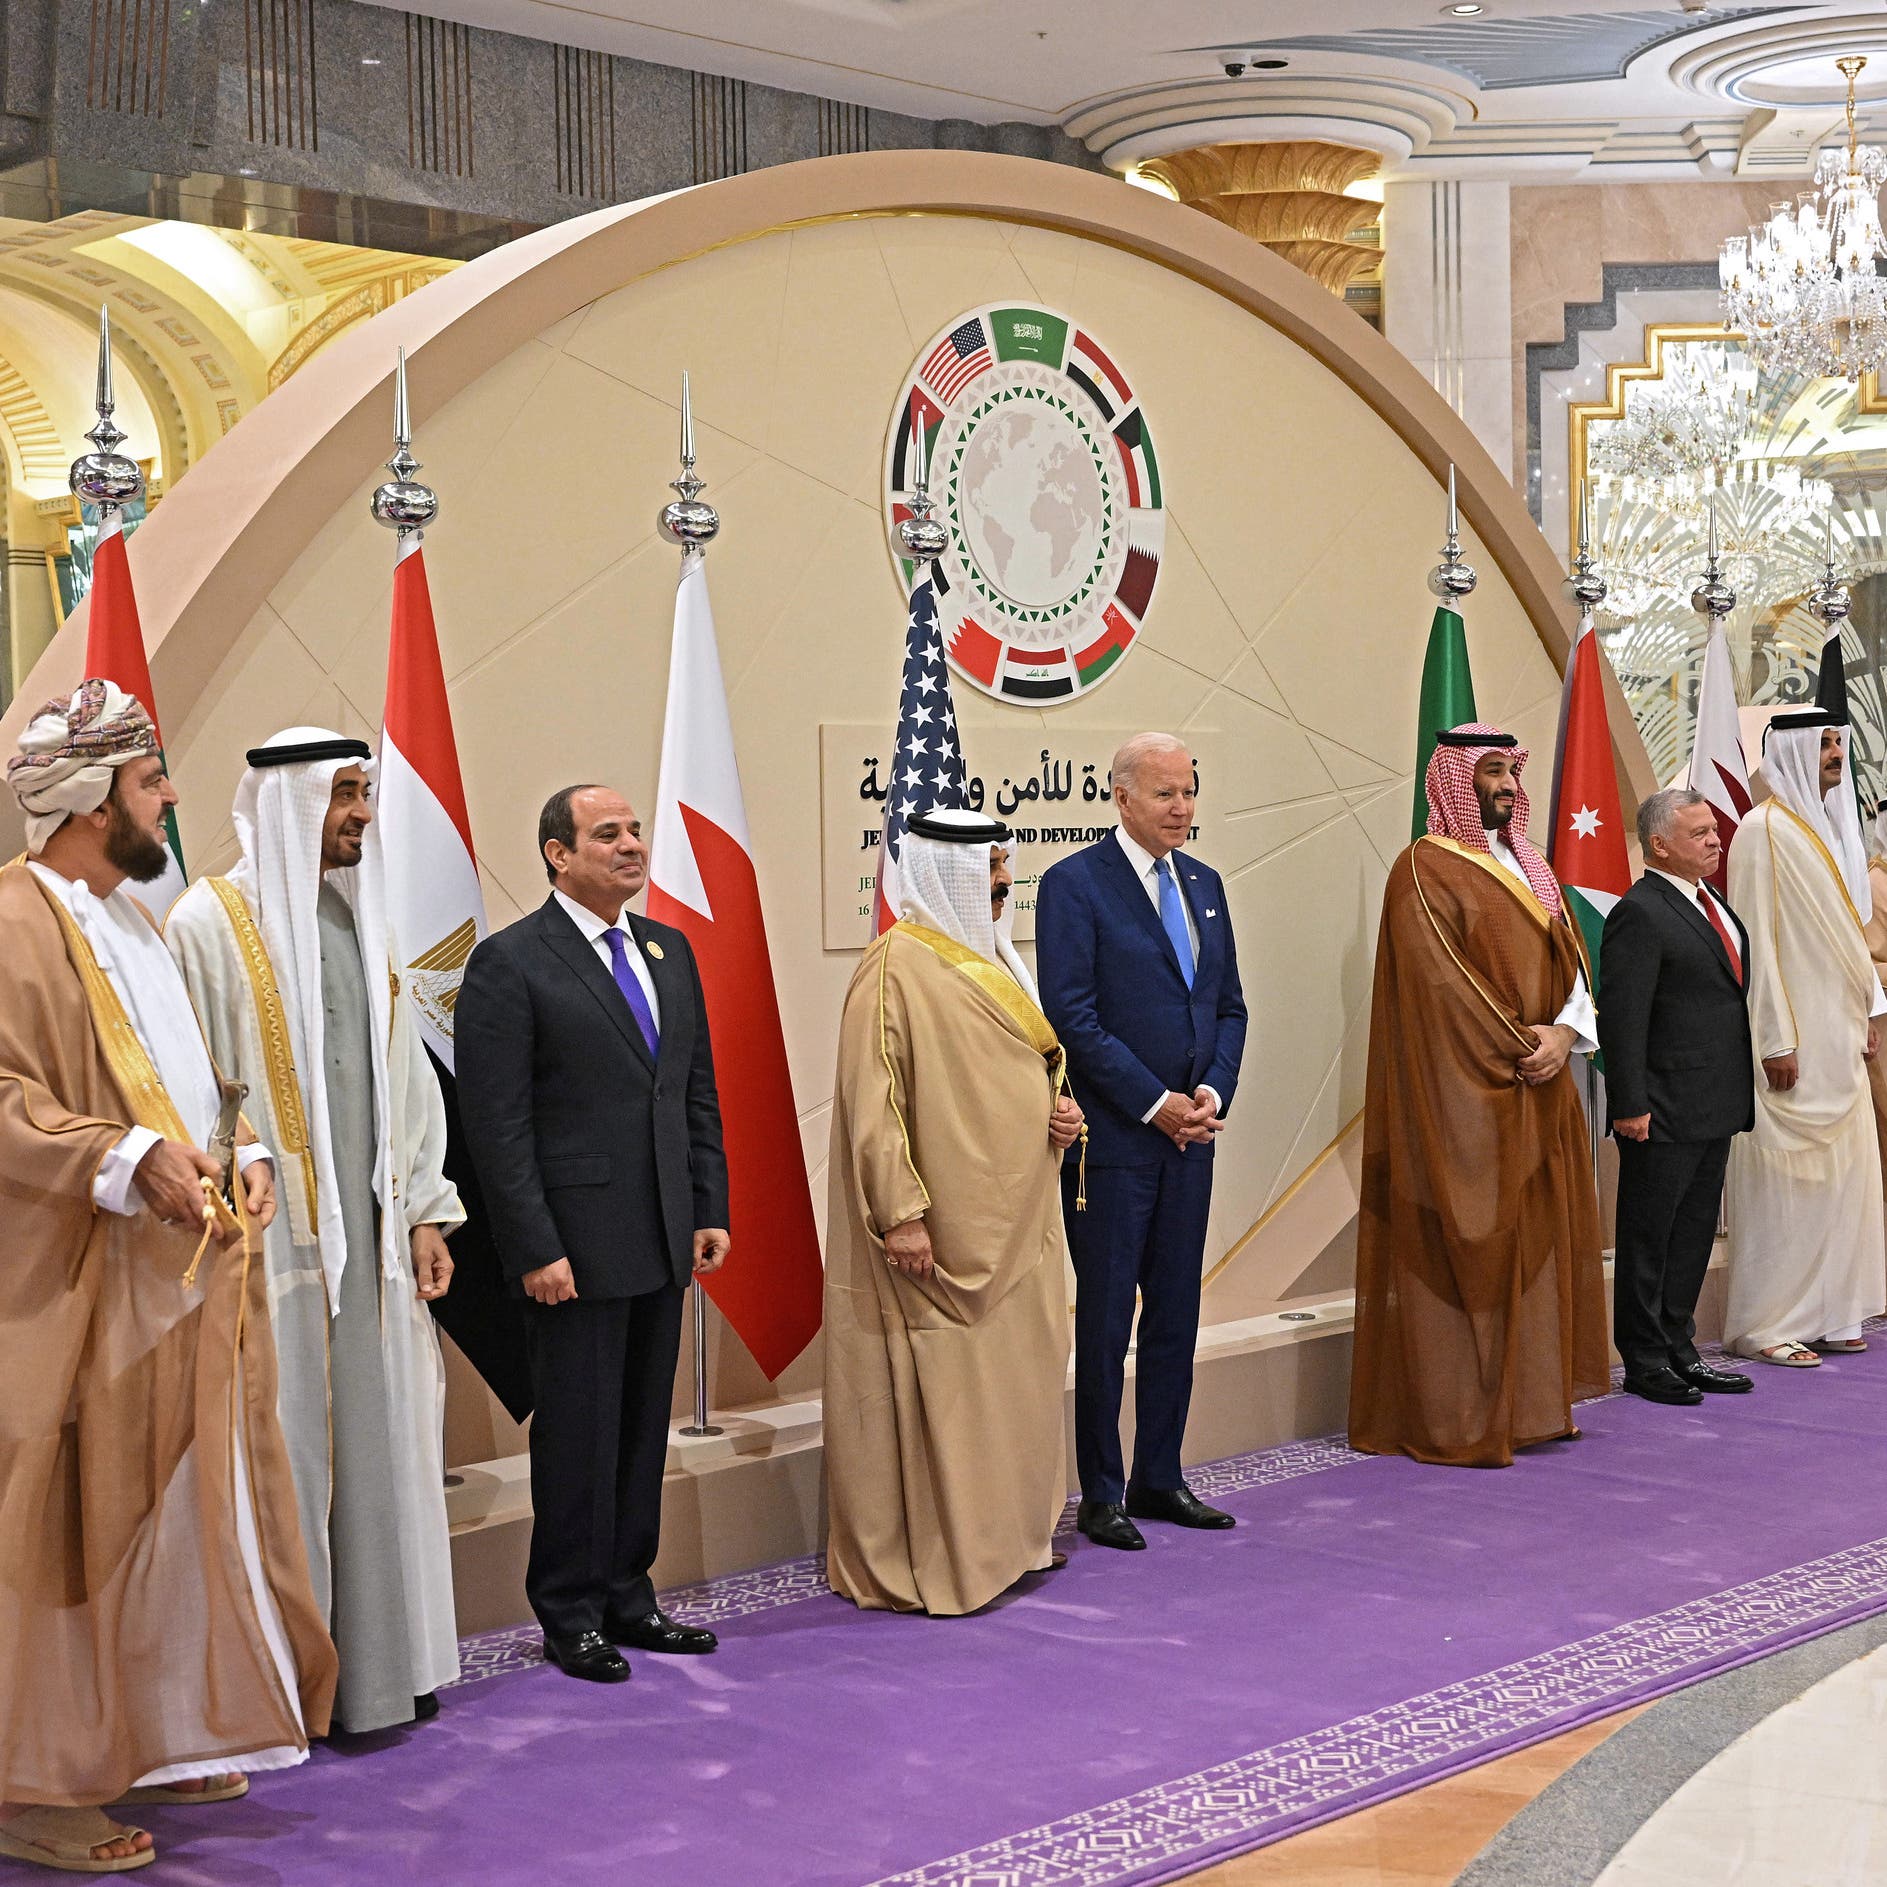 Jeddah summit leaders release joint statement